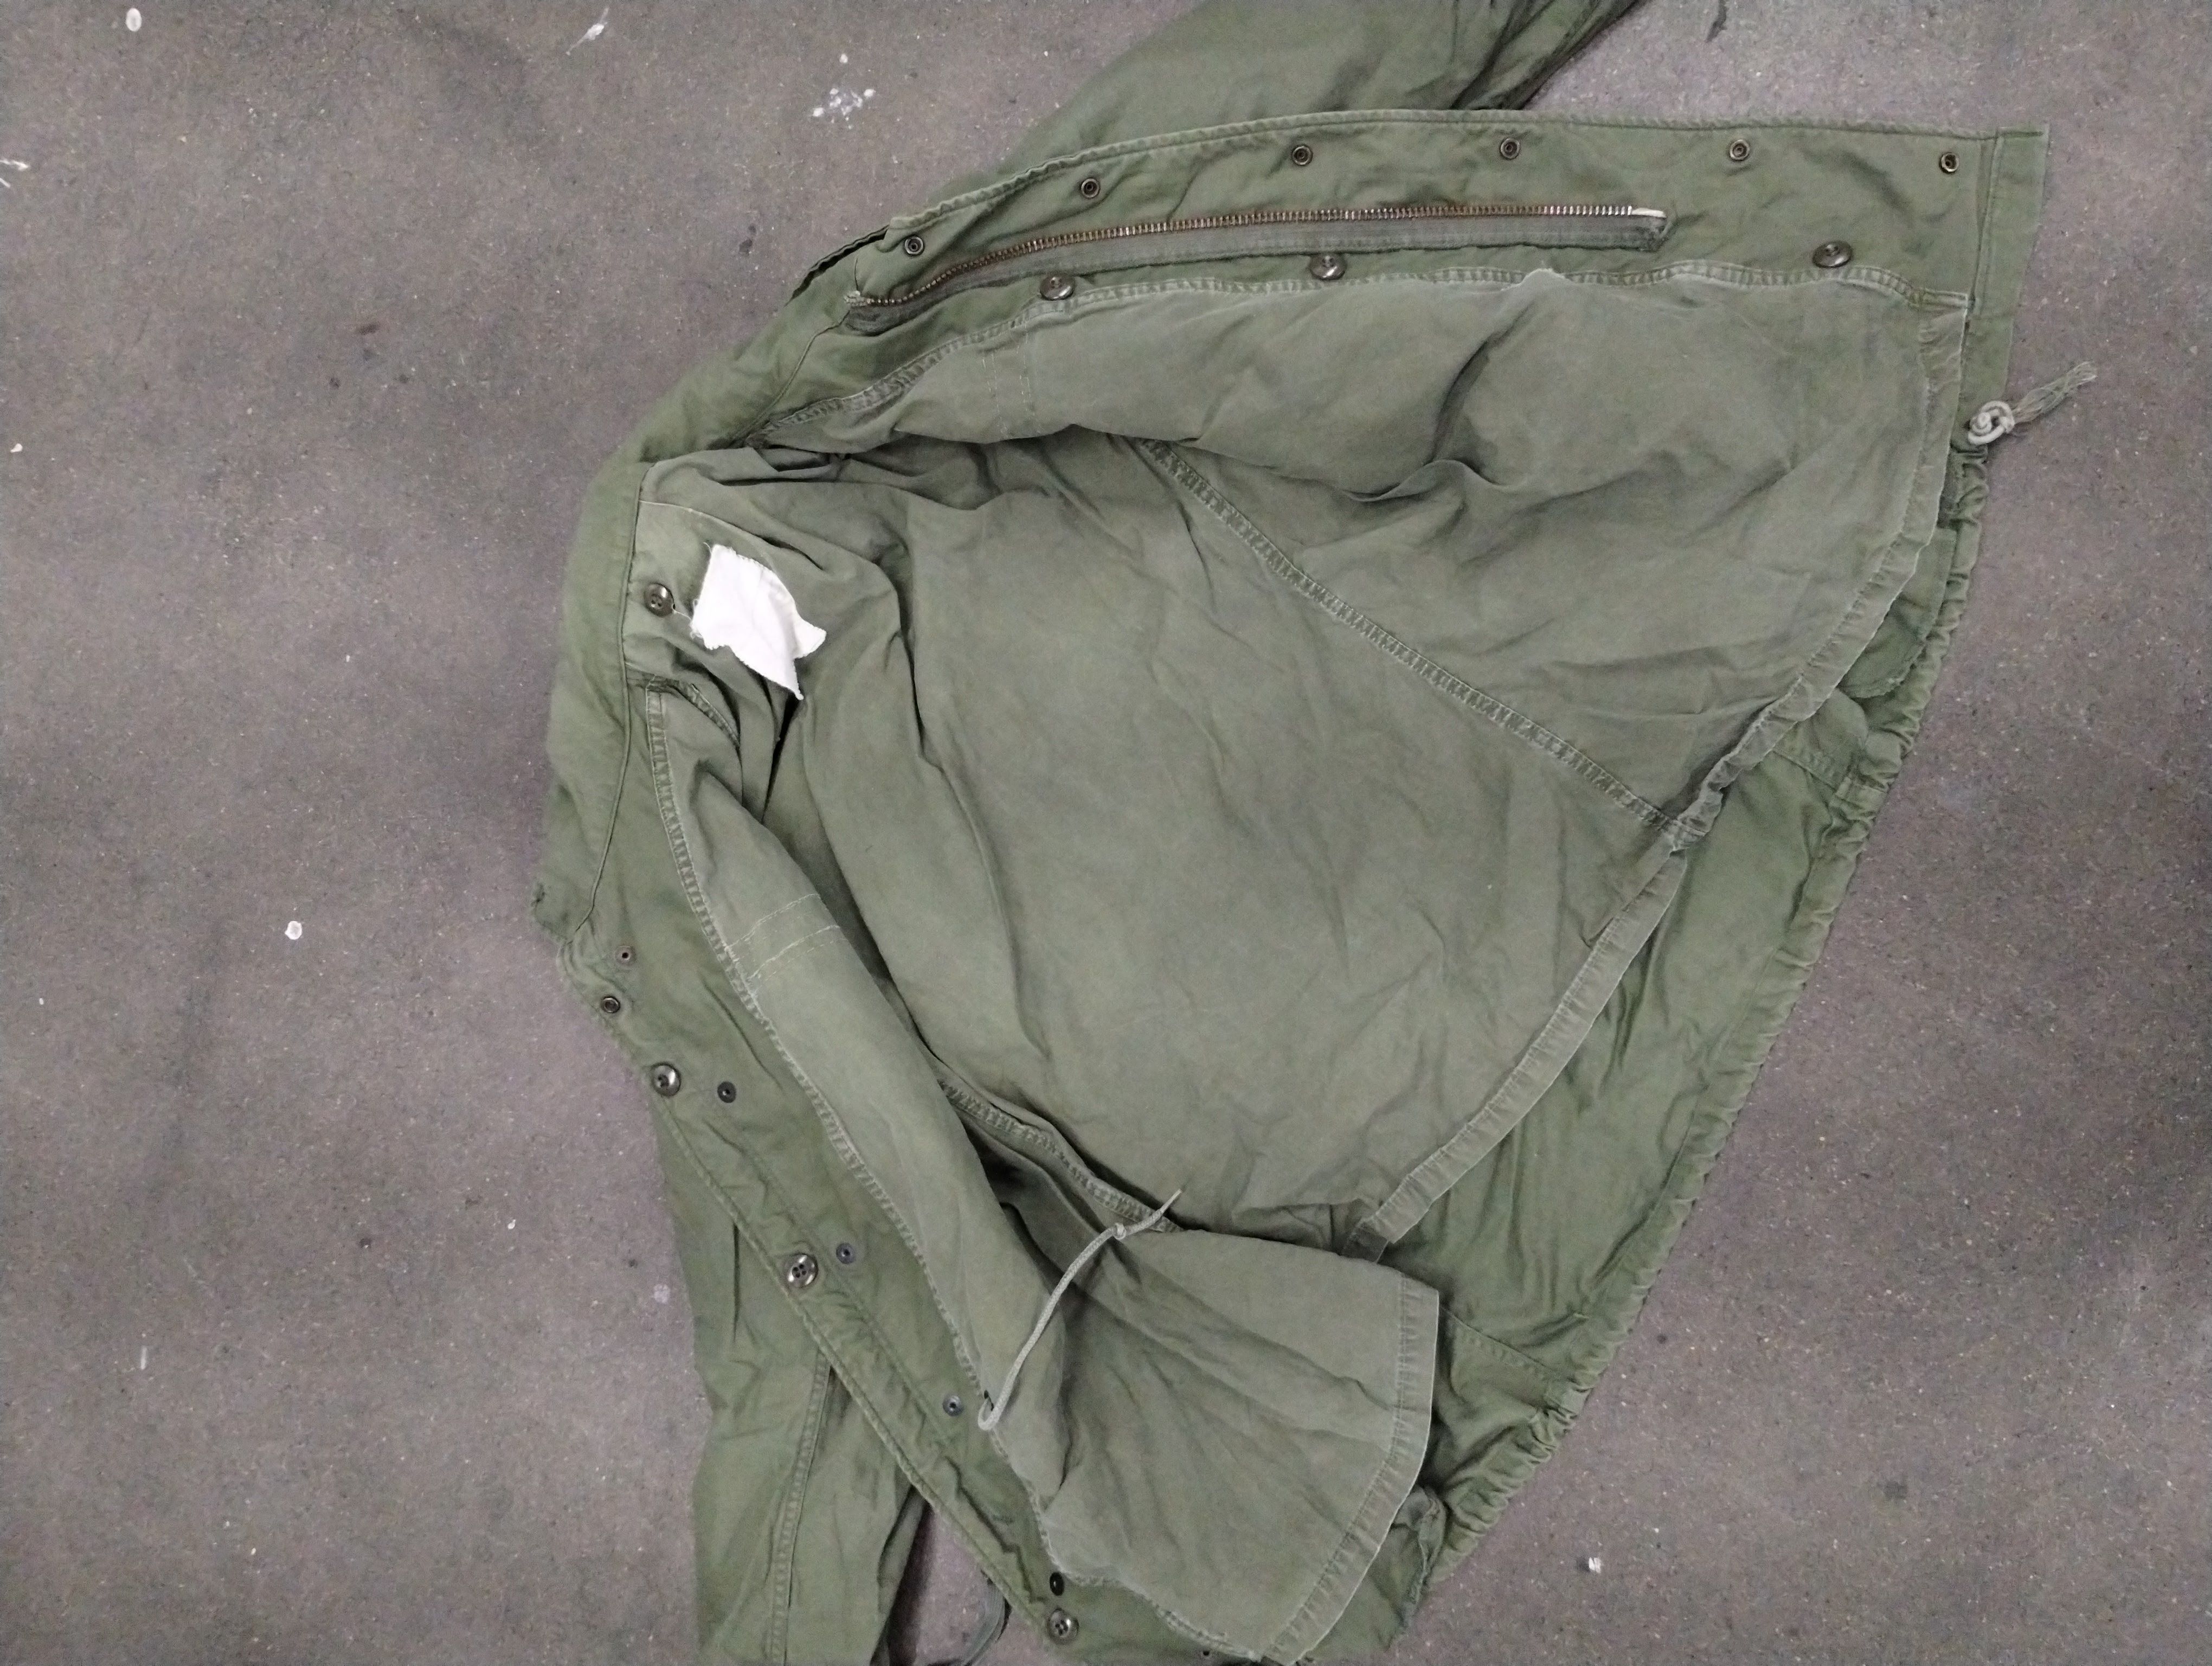 Vintage Vintage Military Zip Up Cotton Field Jacket Size US S / EU 44-46 / 1 - 2 Preview